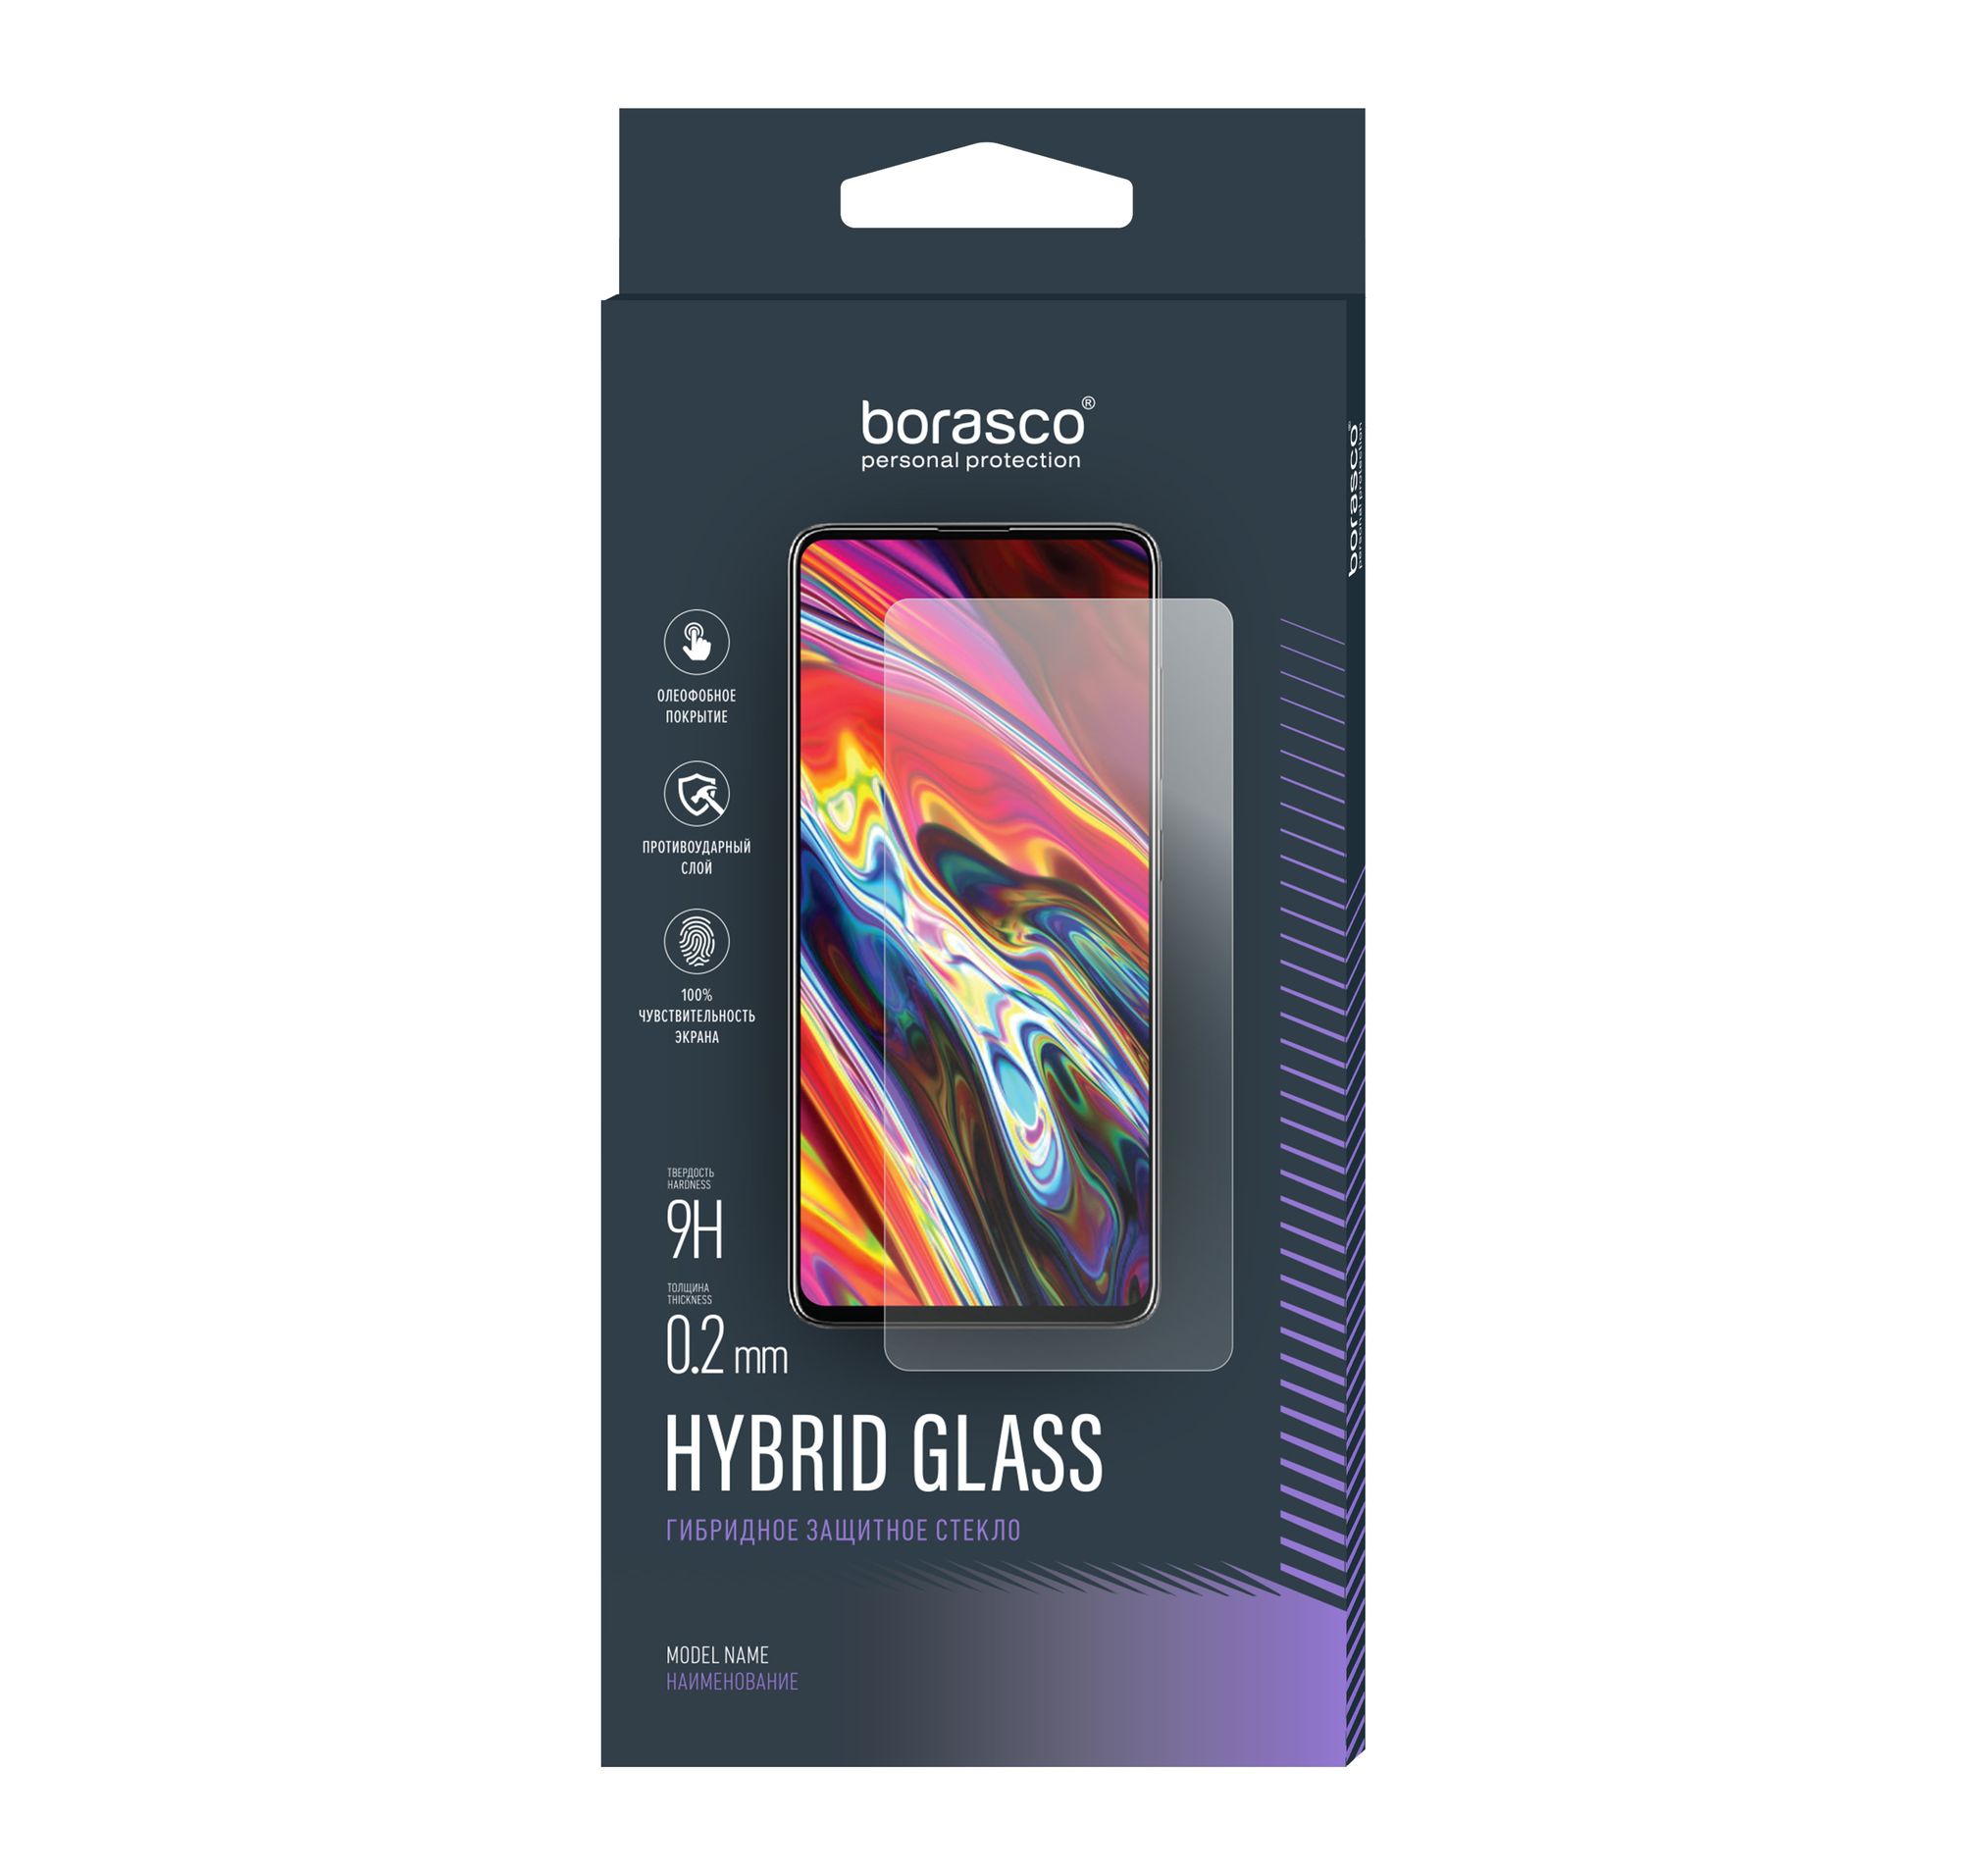 Стекло защитное Hybrid Glass VSP 0,26 мм для Sony Xperia Z5 Premium коннектор сим карты sim для sony e6683 xperia z5 dual e6883 xperia z5 premium dual